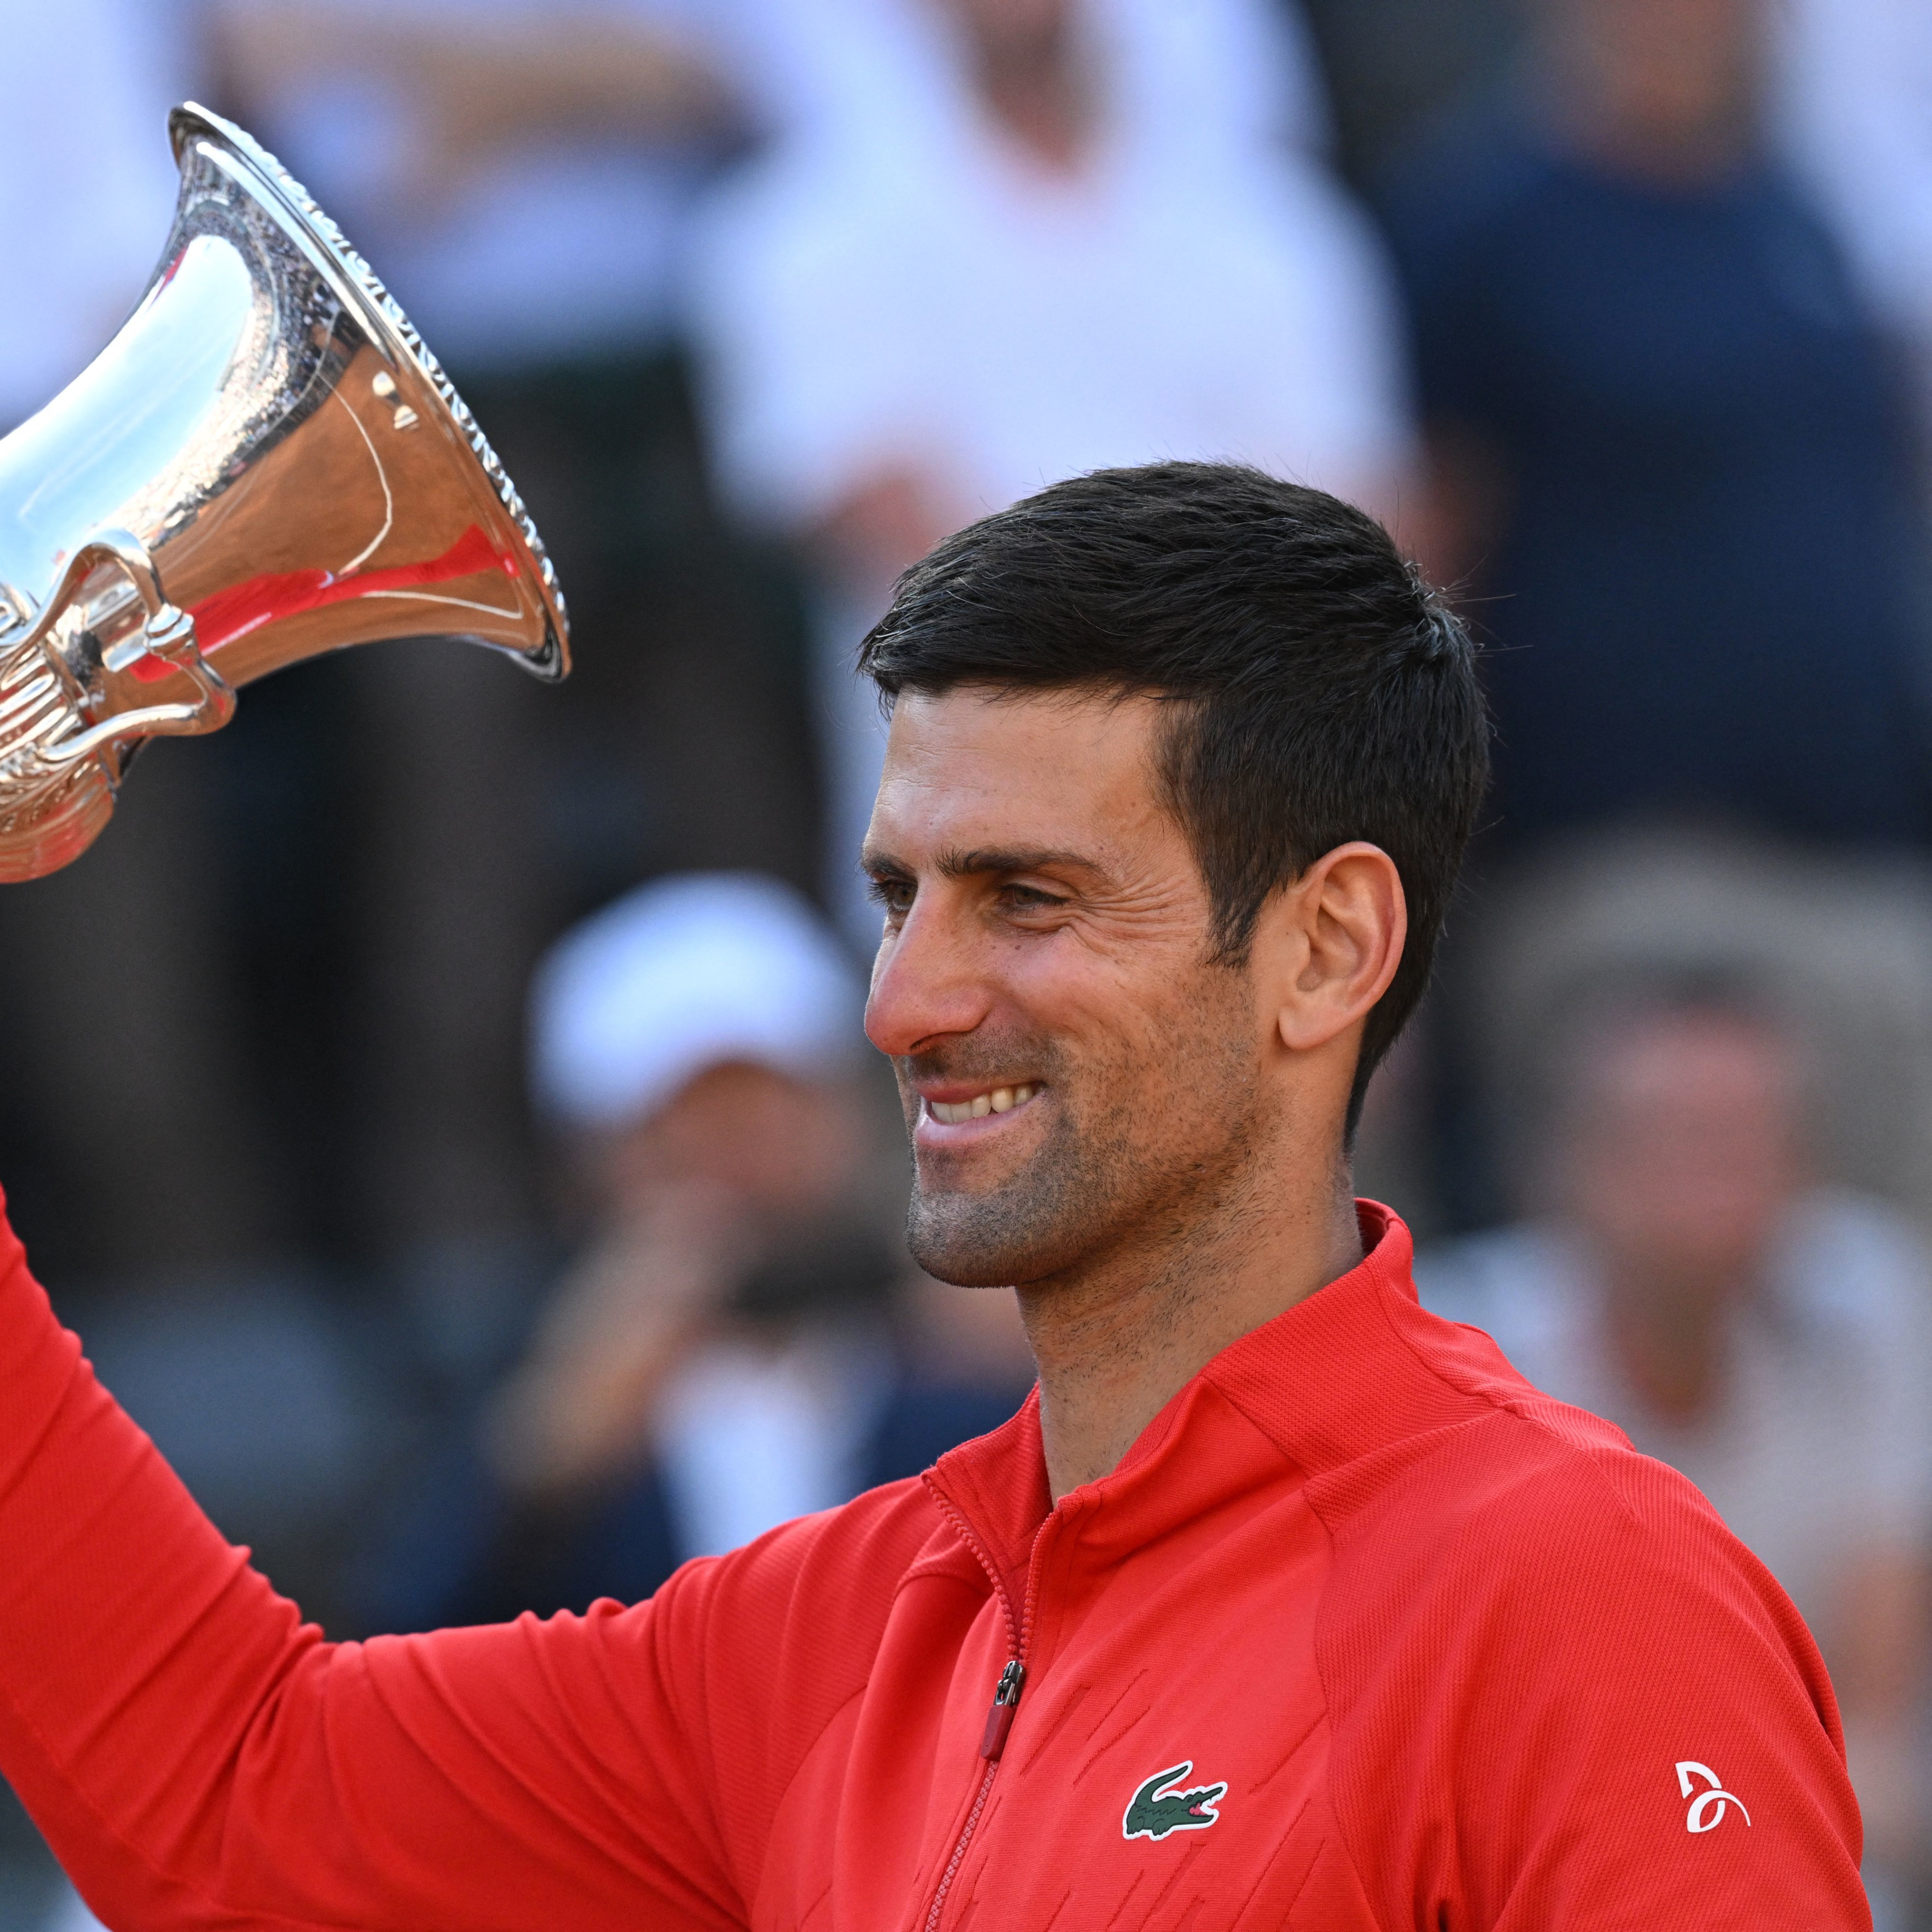 Novak Djokovic wins every set, ahead of the 2022 French Open thumbnail